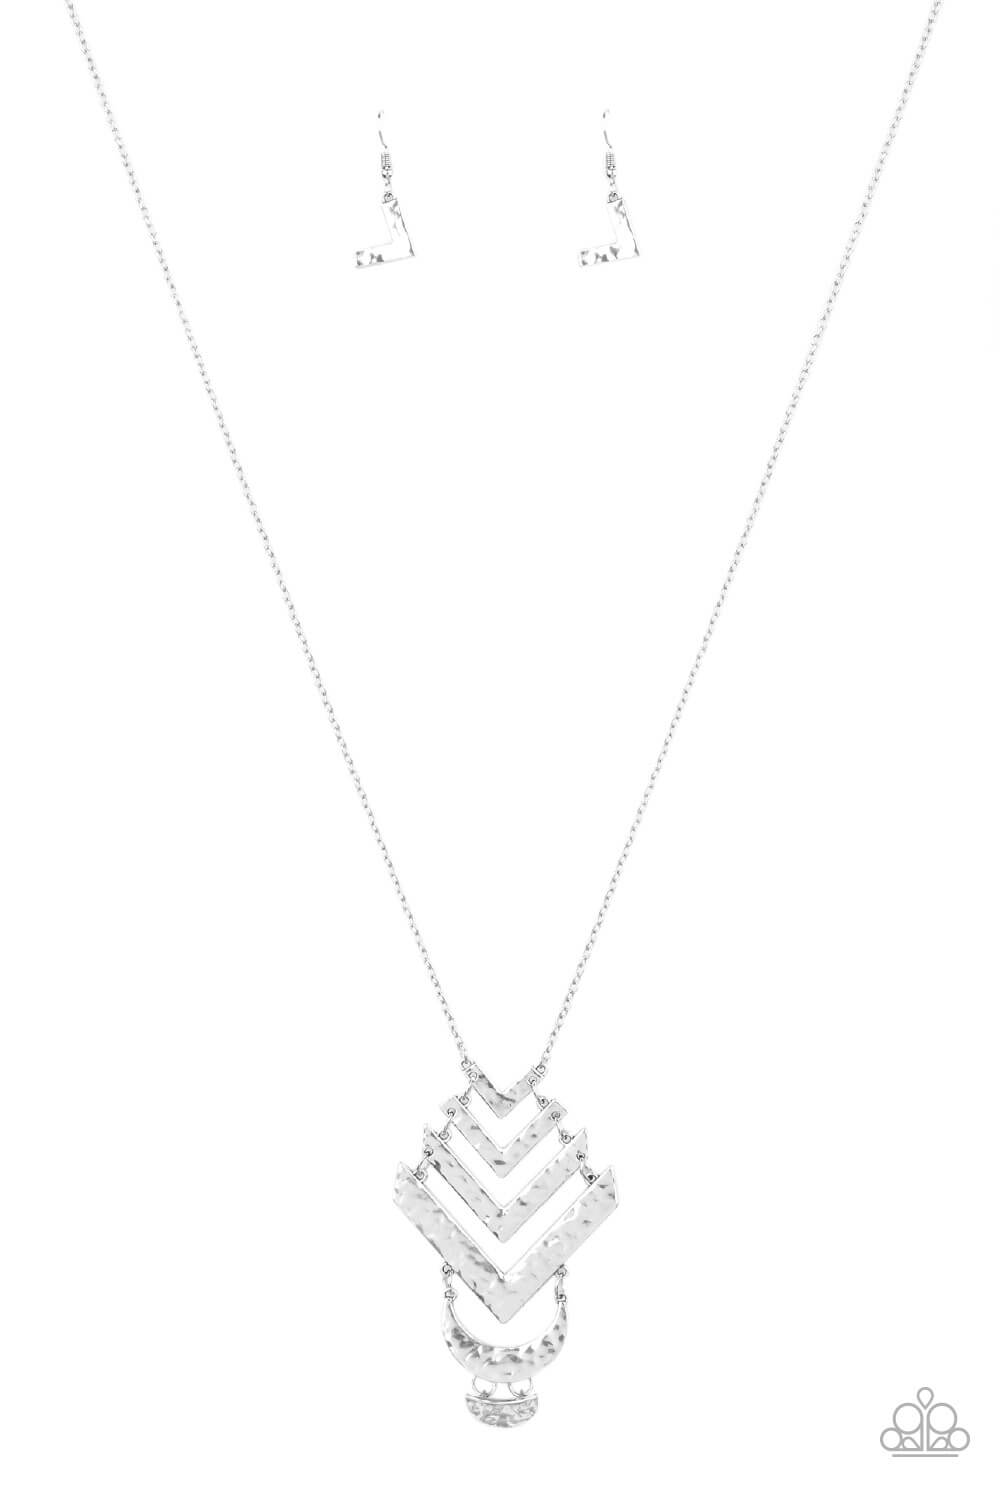 Artisan Edge - Silver Necklace set - Princess Glam Shop